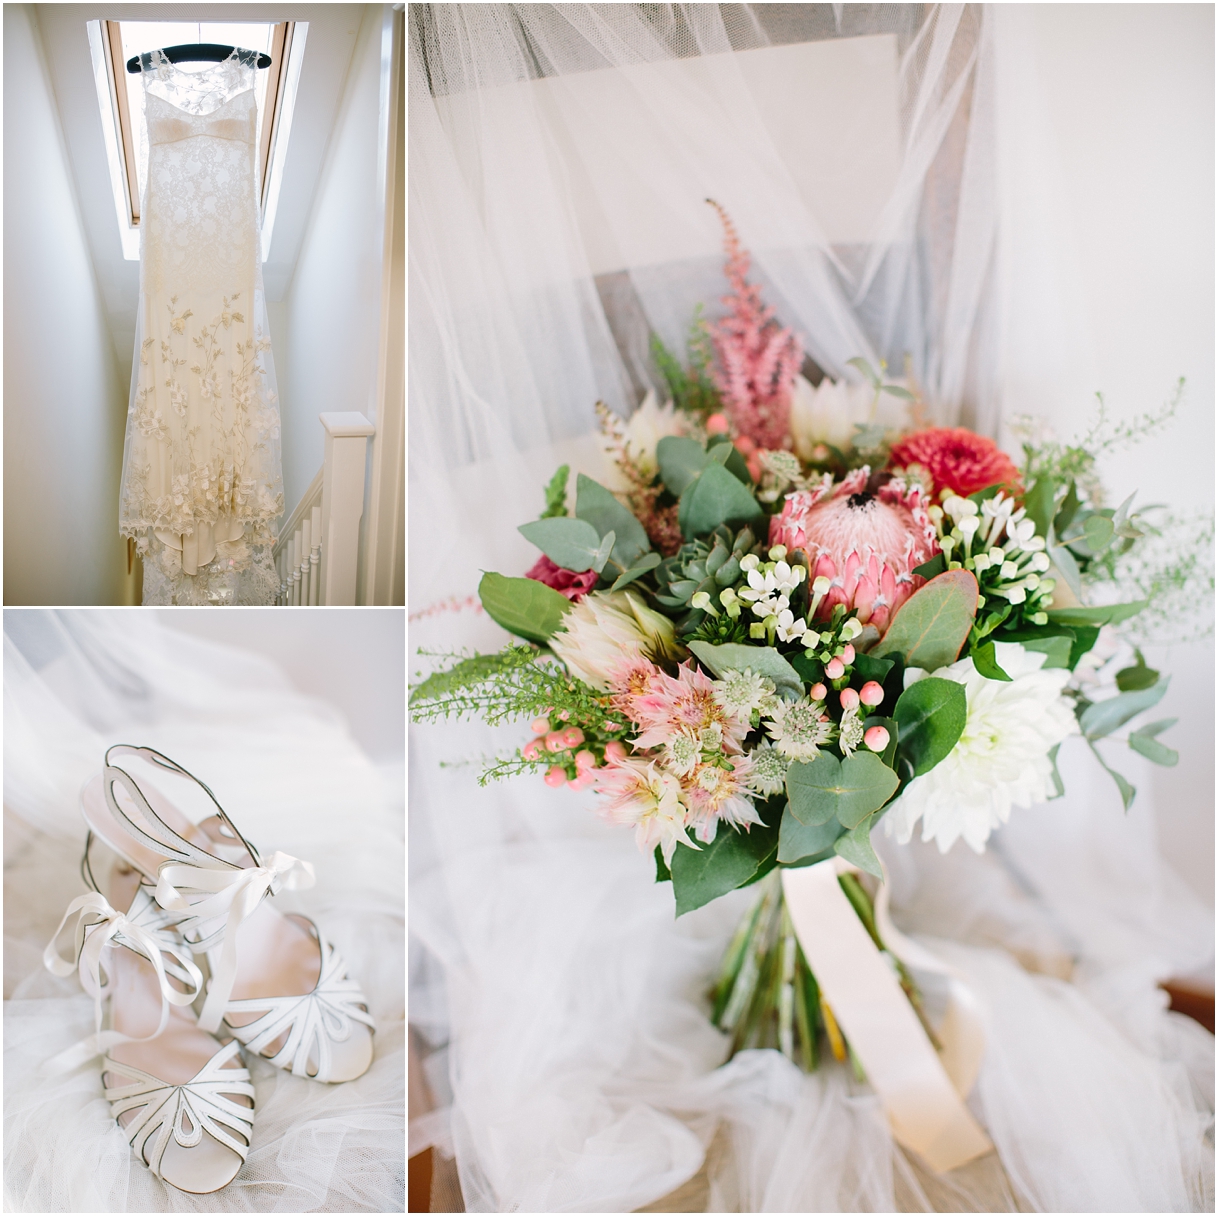 Wedding dress and wedding bouquet